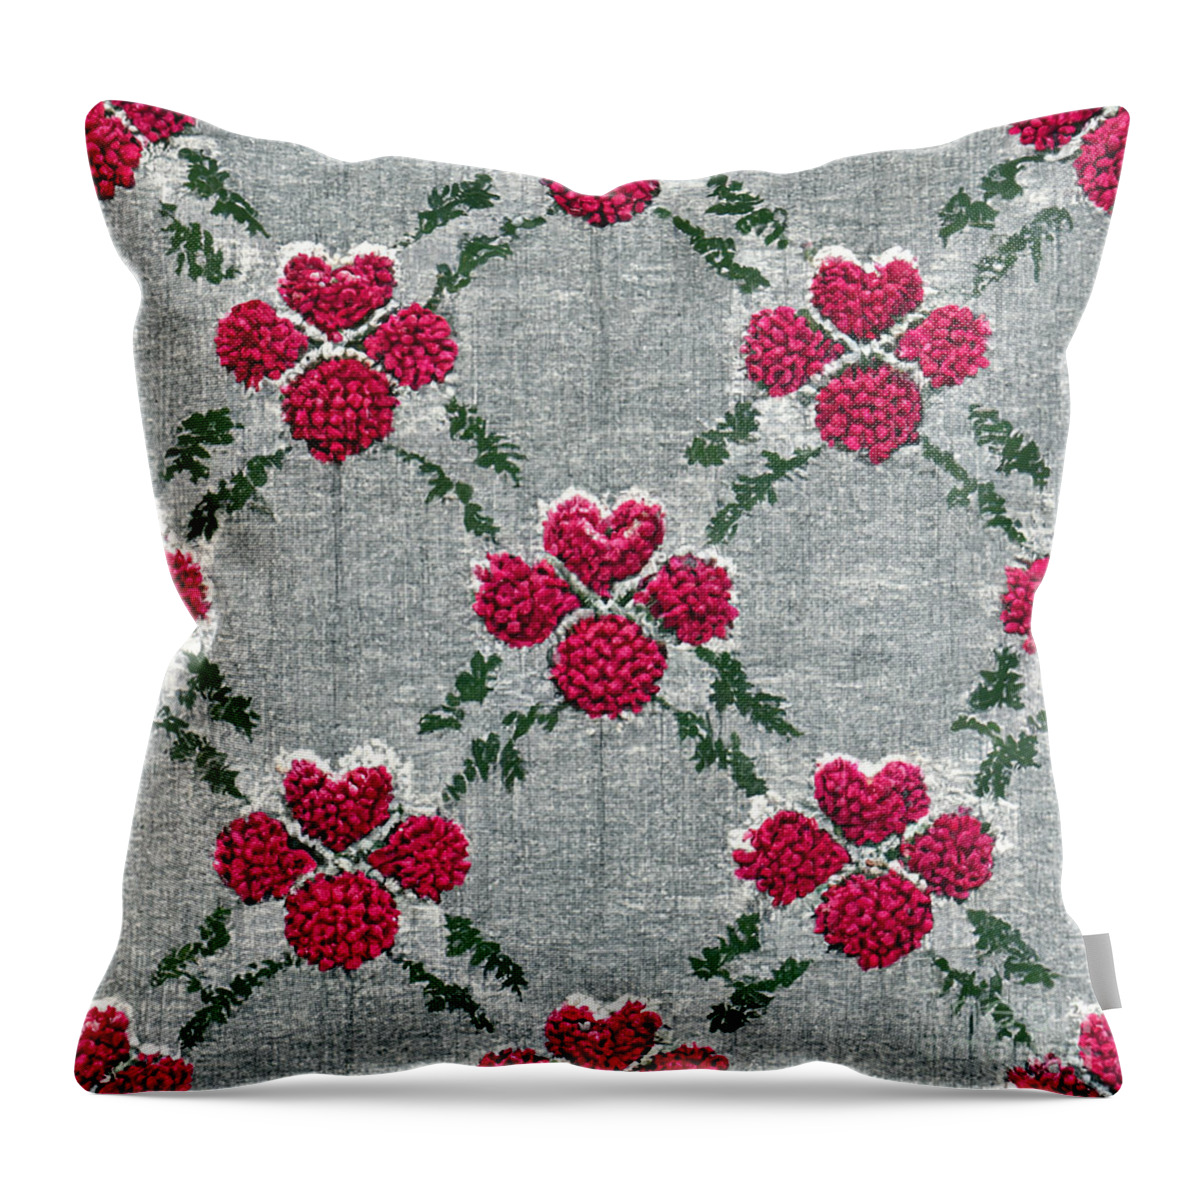 Series Throw Pillow featuring the digital art Seamless Christmas pattern #13 by Sabantha